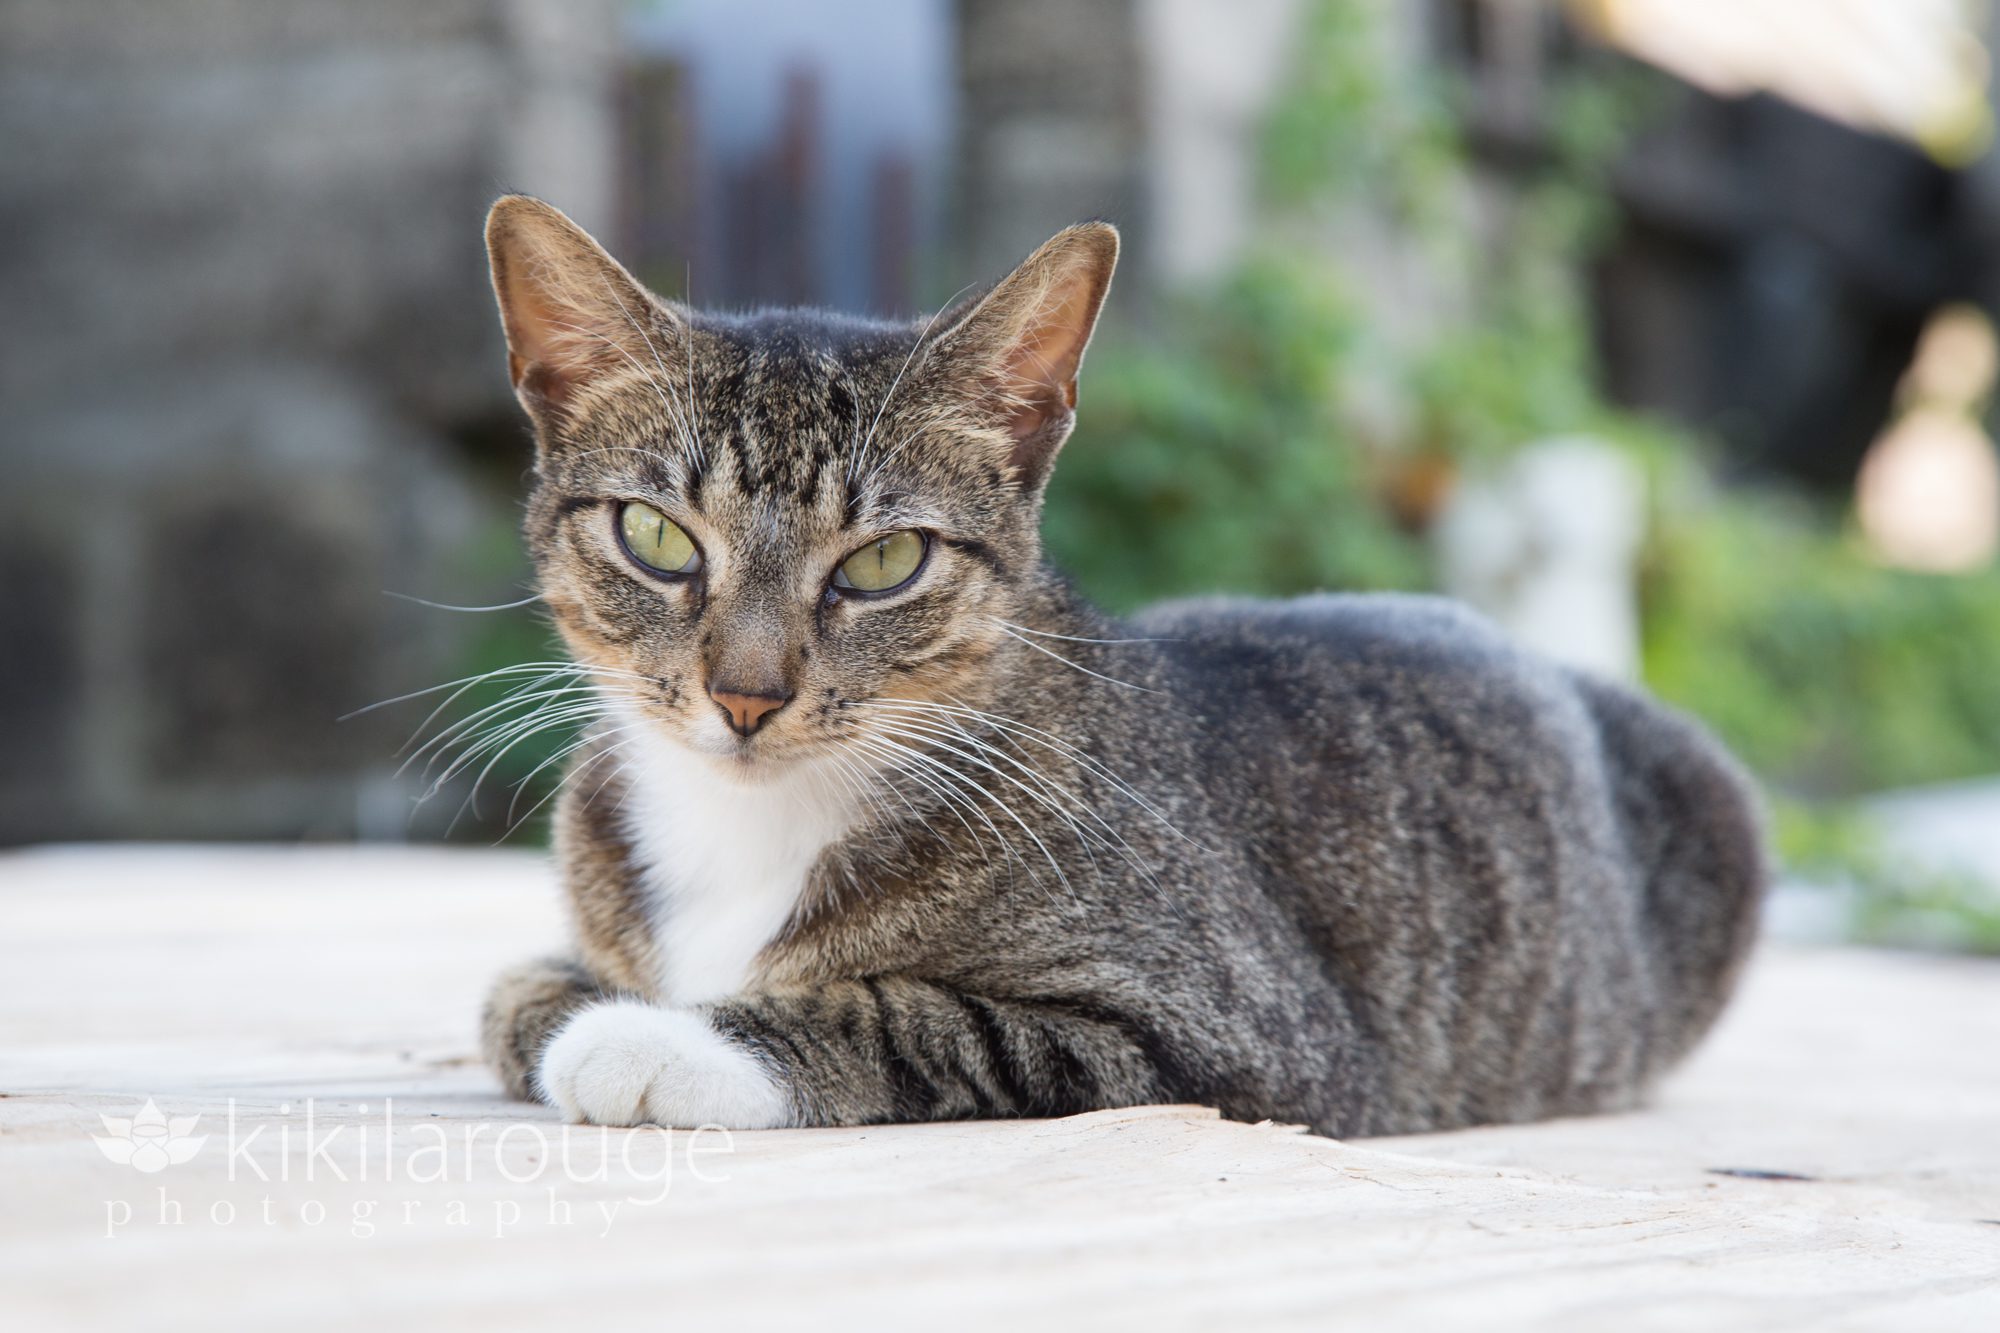 Rescue cat at Caye Caulker Belize